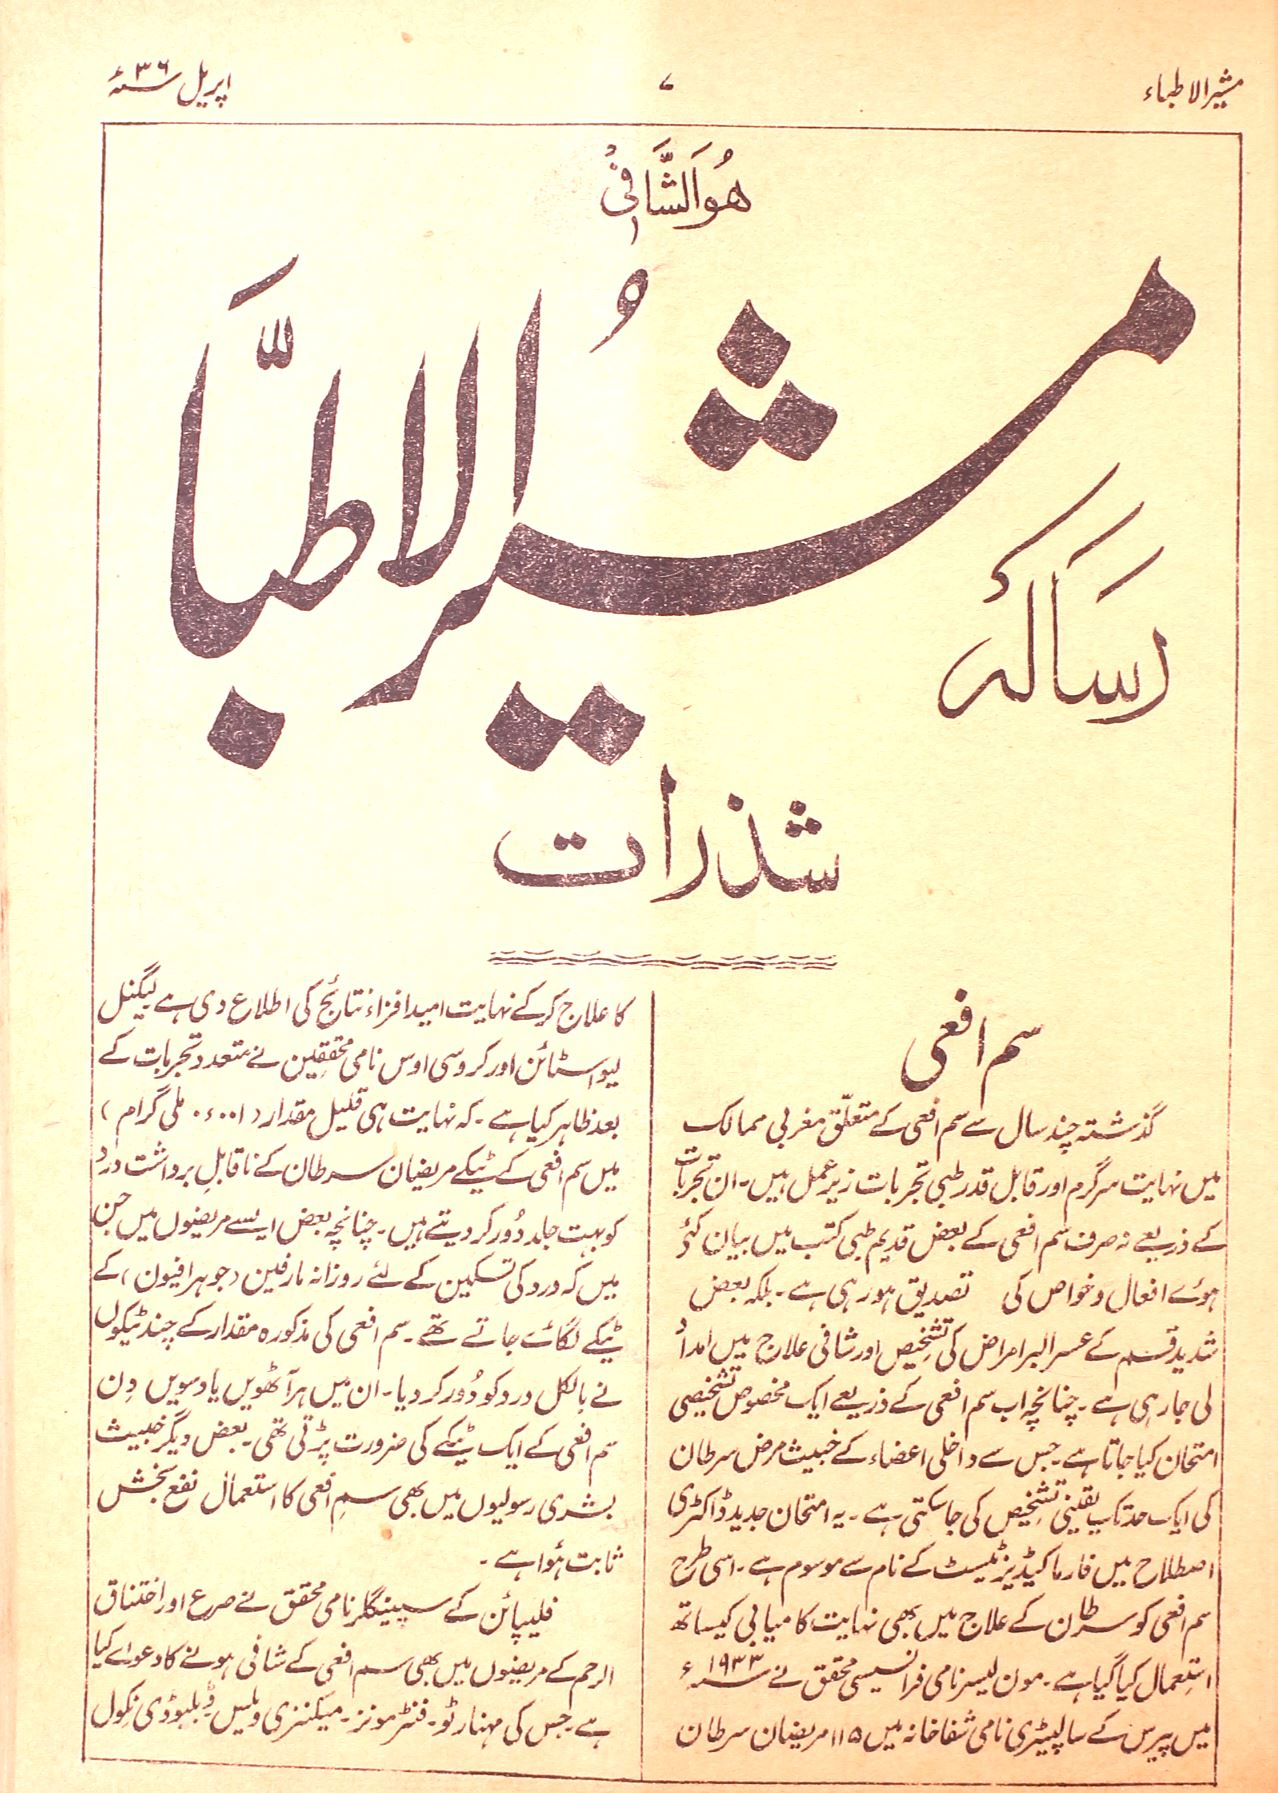 Masheer Ul Attiba Jild 14 No 7 April 1936-GNTC